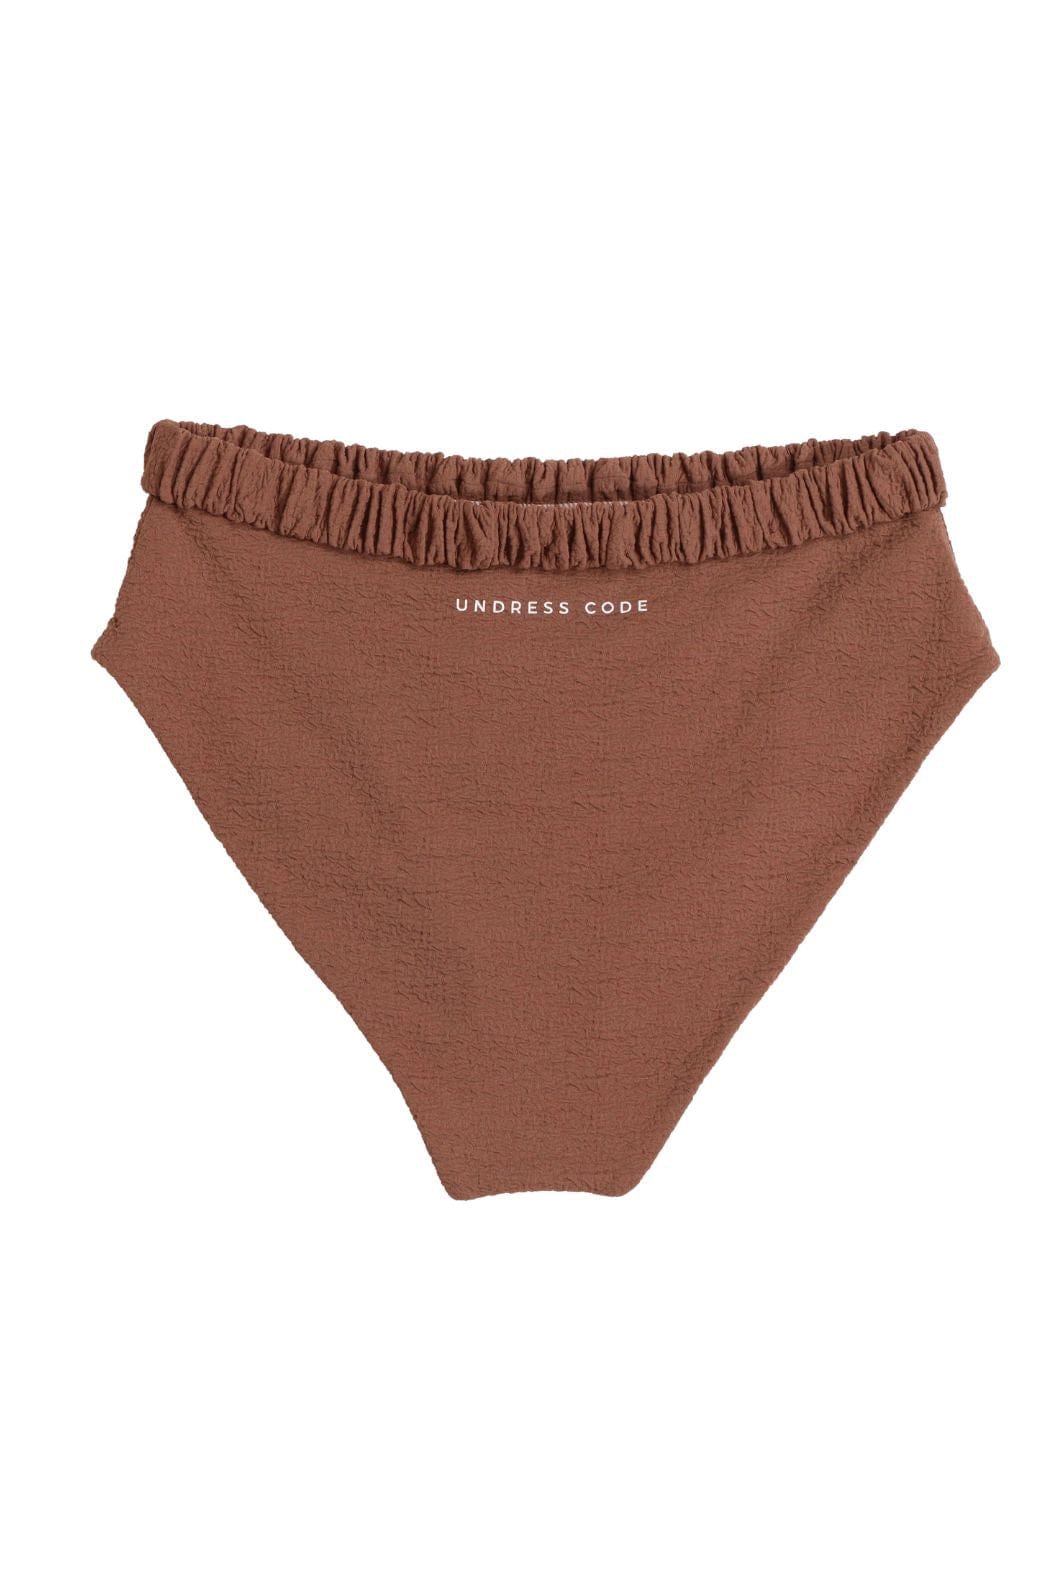 Undress Code Bikini Bottom Praline / M Good Luck Charm Bikini Bottom - Brown